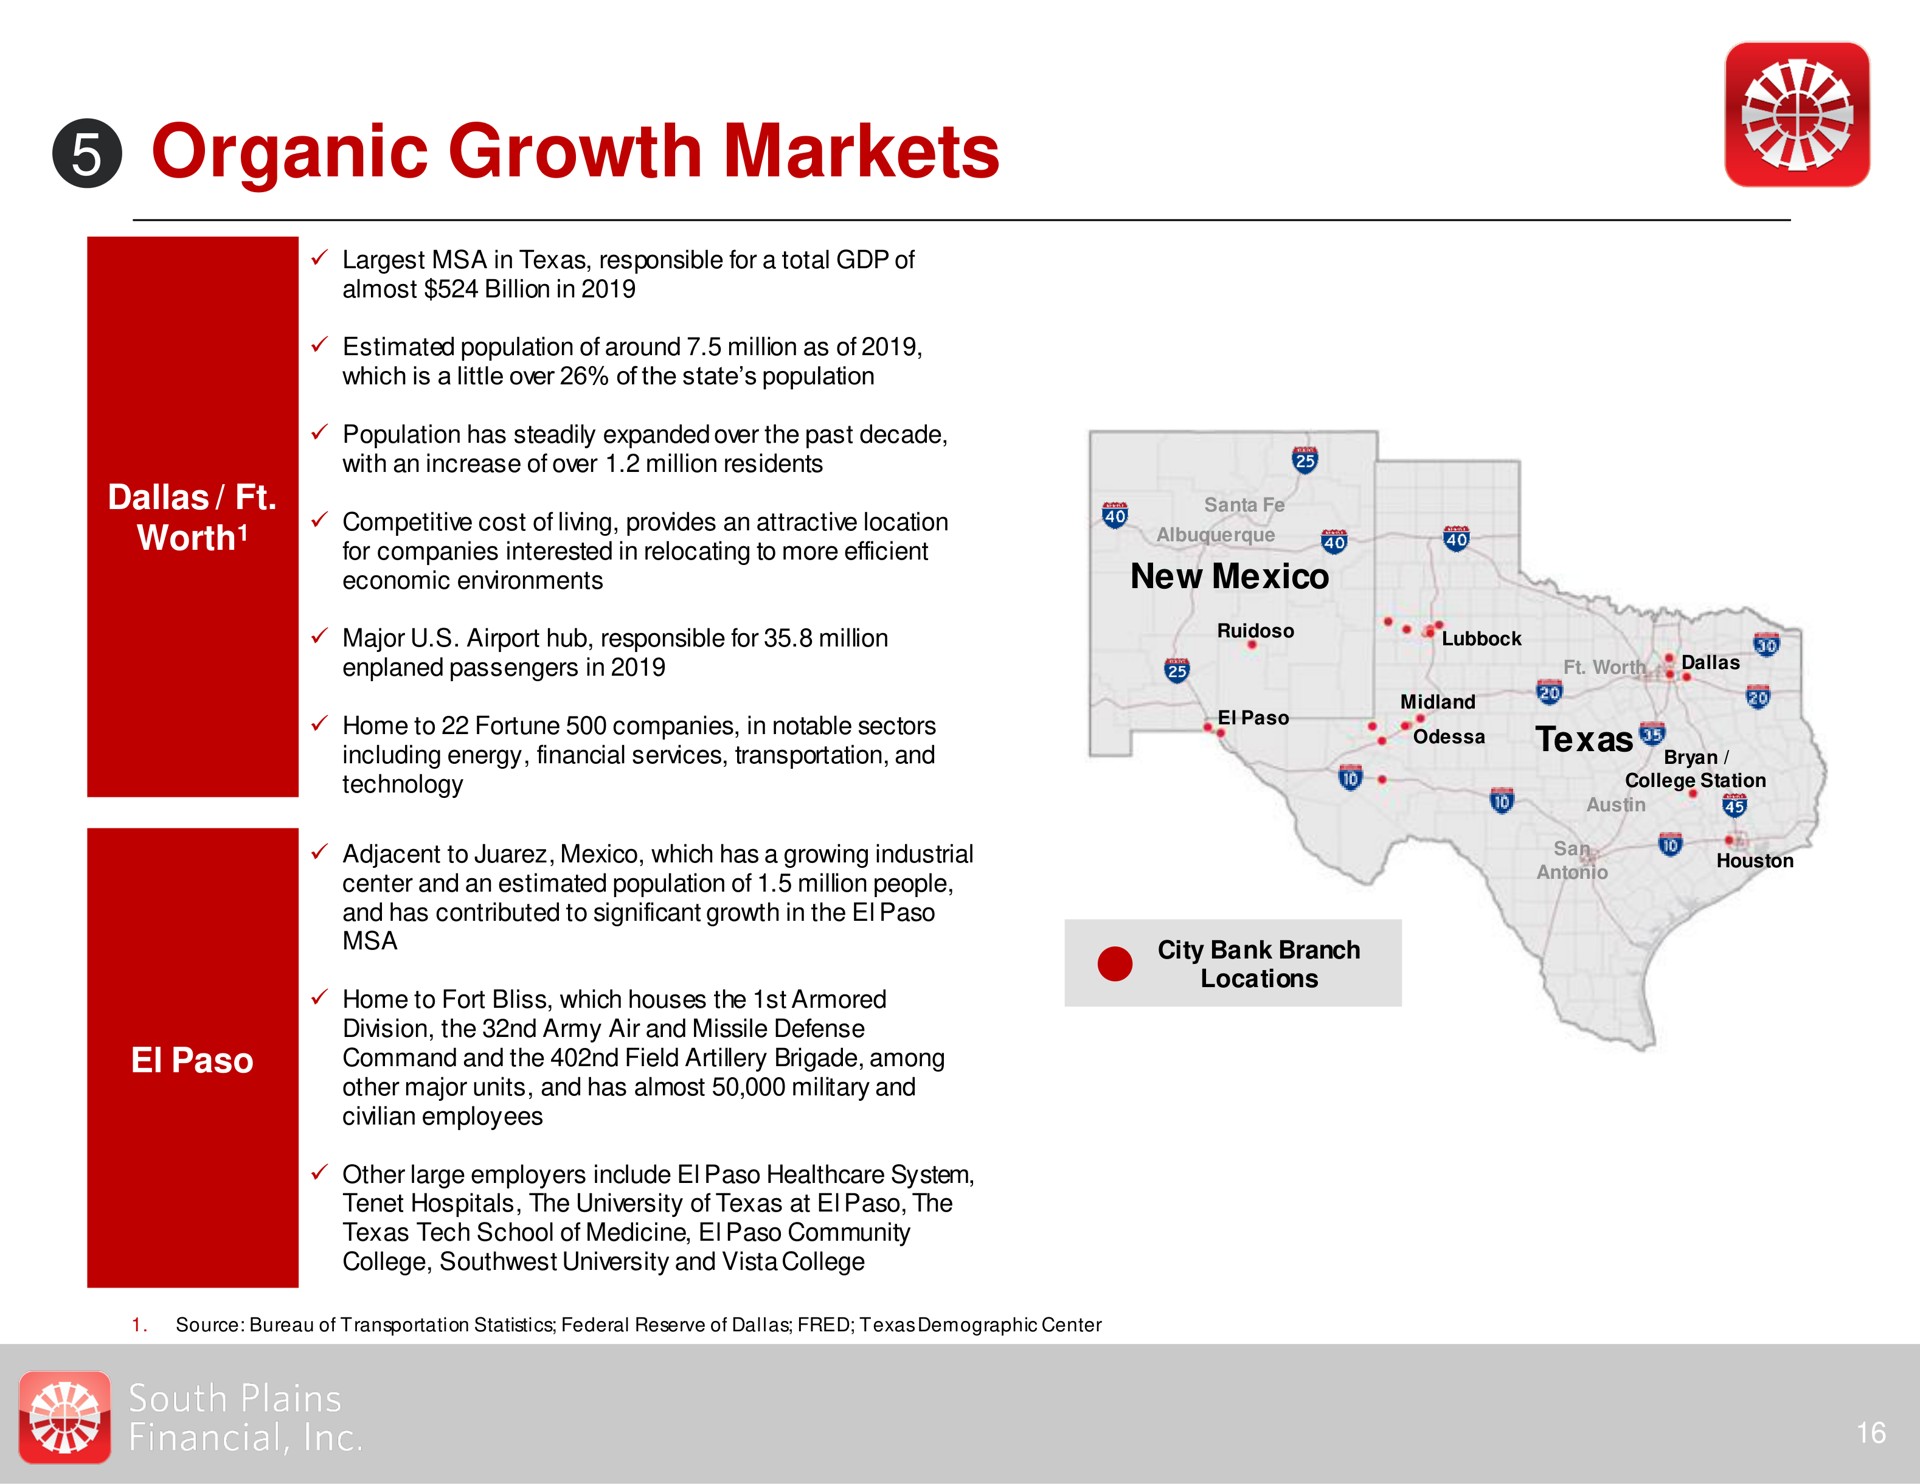 organic growth markets | South Plains Financial